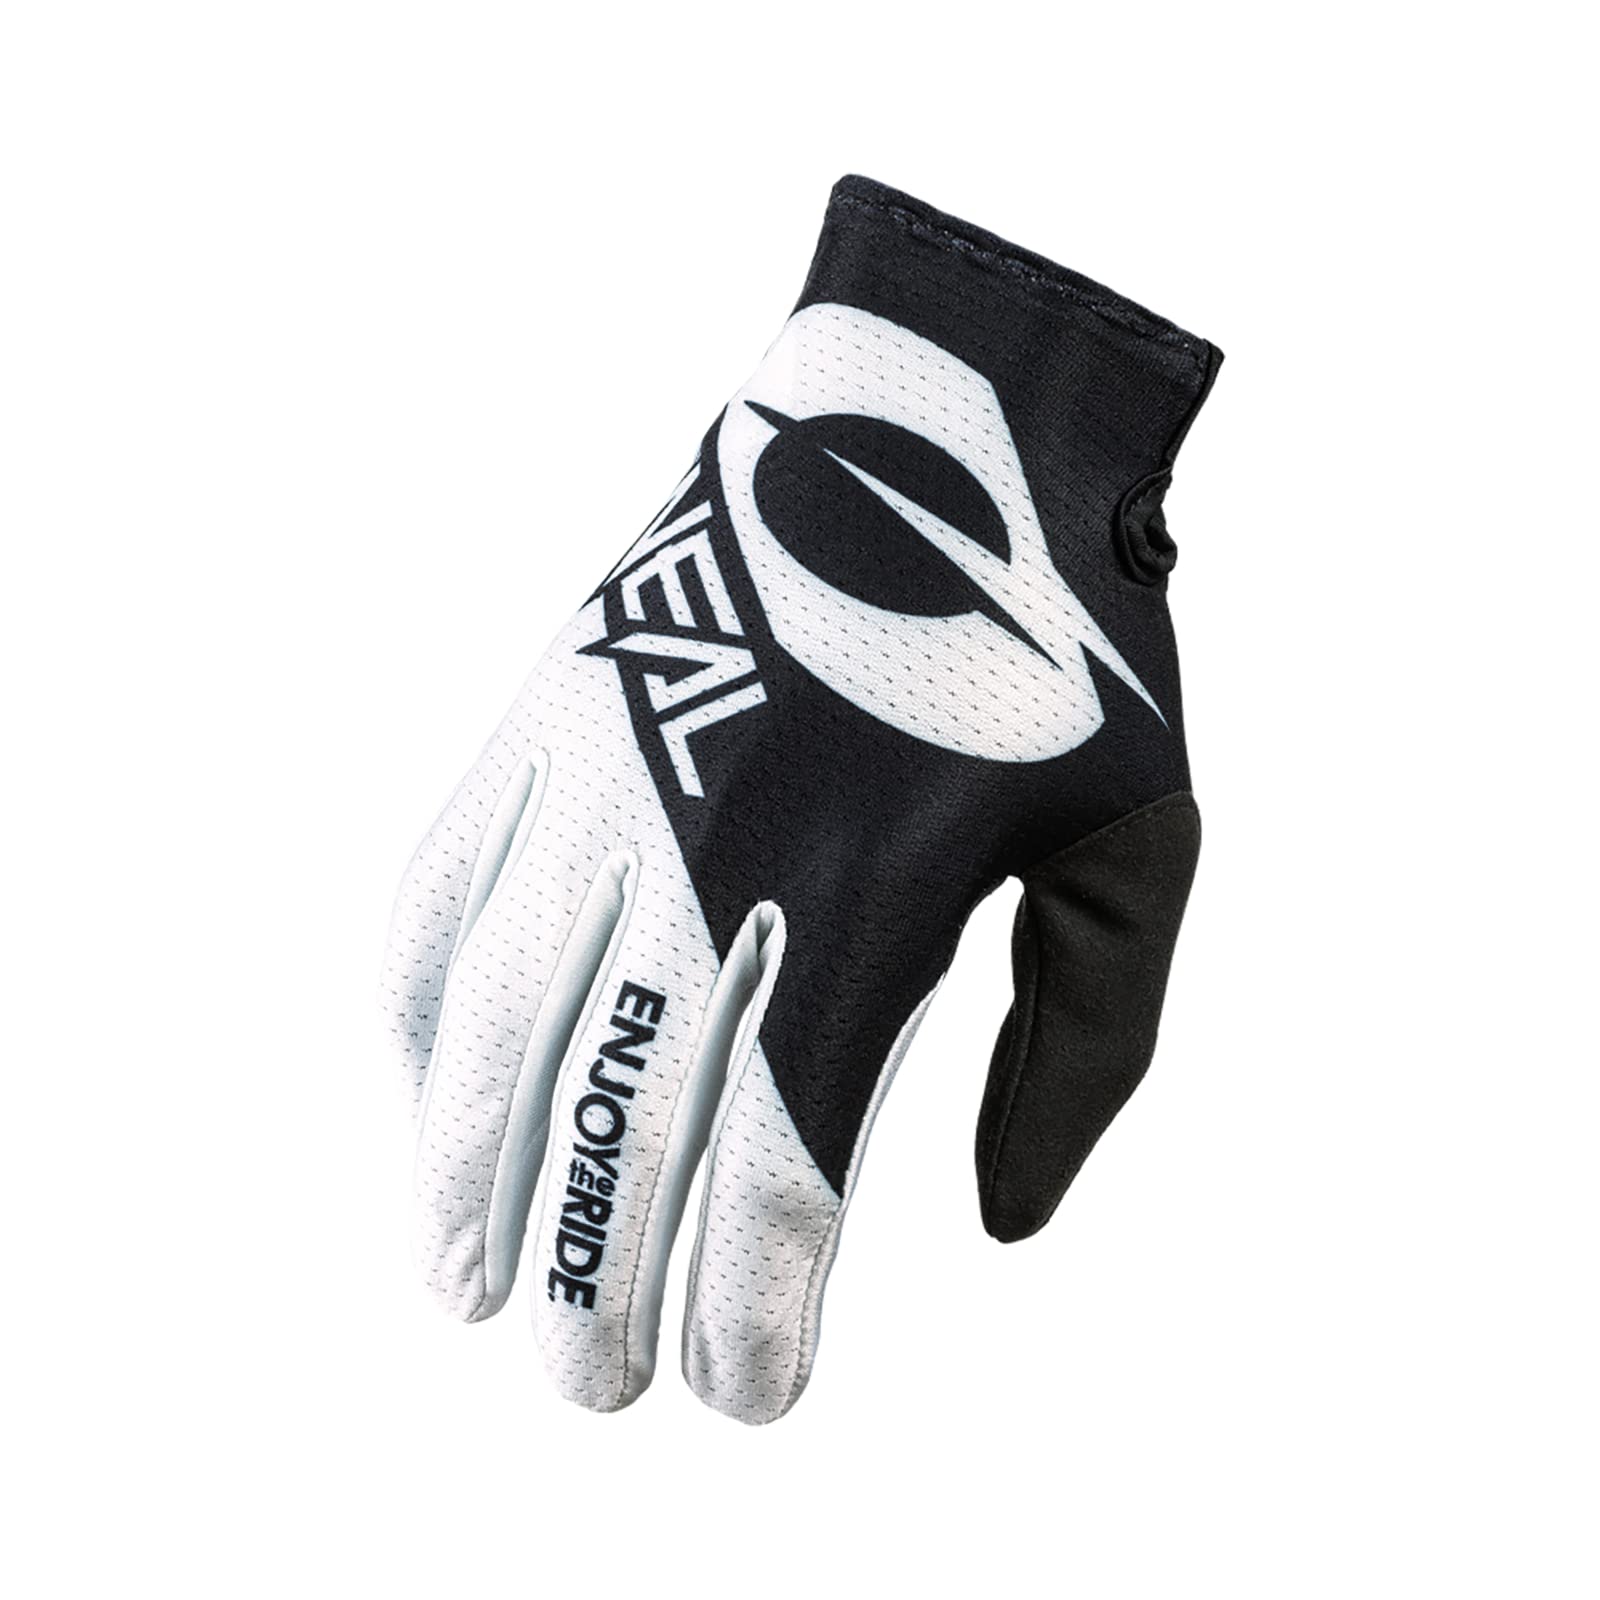 O'NEAL | Fahrrad- & Motocross-Handschuhe | MX MTB DH FR Downhill Freeride | Langlebige, Flexible Materialien, belüftete Handoberseite | Matrix Glove | Erwachsene | Schwarz Weiß | Größe XXL von O'NEAL